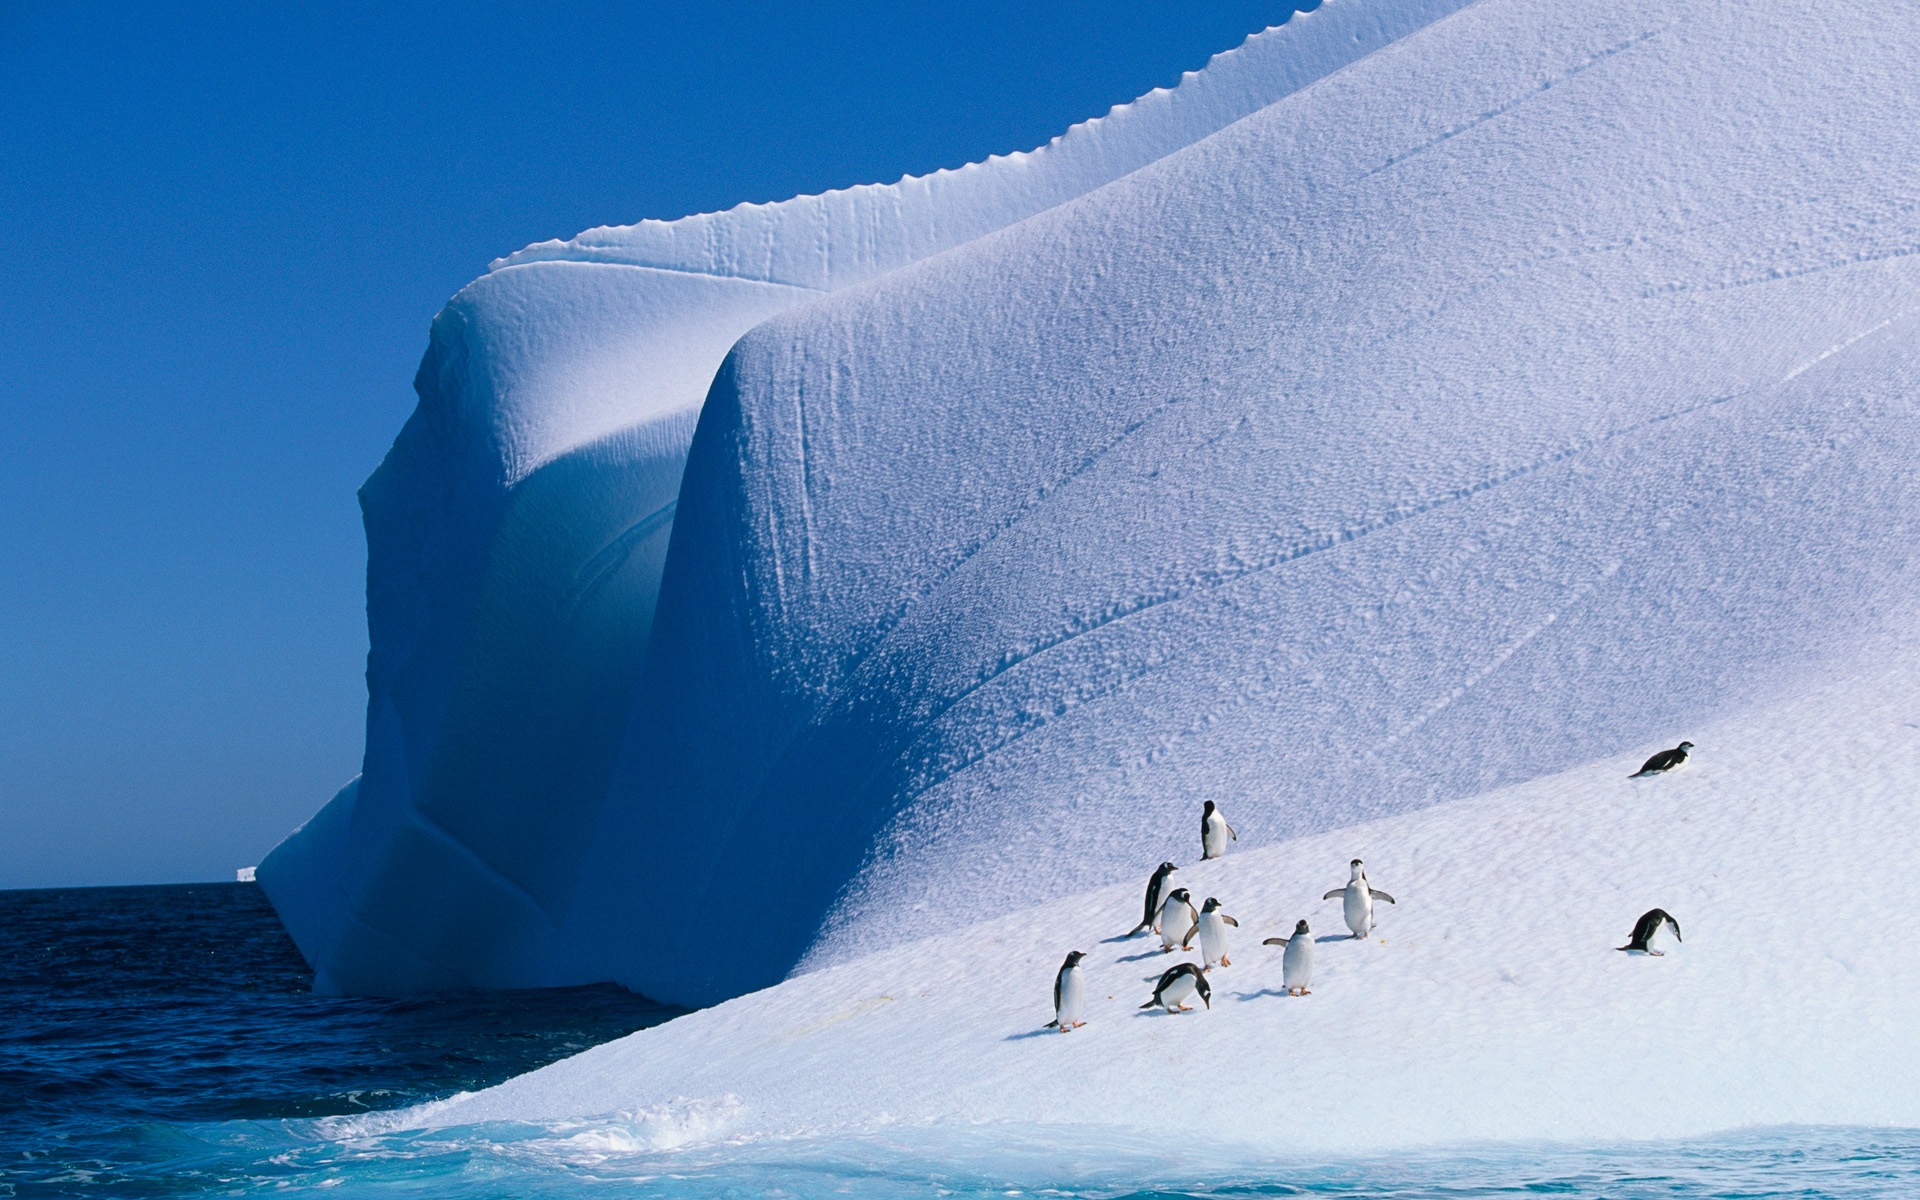 Windows 8 壁纸 南极洲 冰雪风景 南极企鹅1 19x10 壁纸下载 Windows 8 壁纸 南极洲 冰雪风景 南极企鹅 系统 壁纸 V3壁纸站